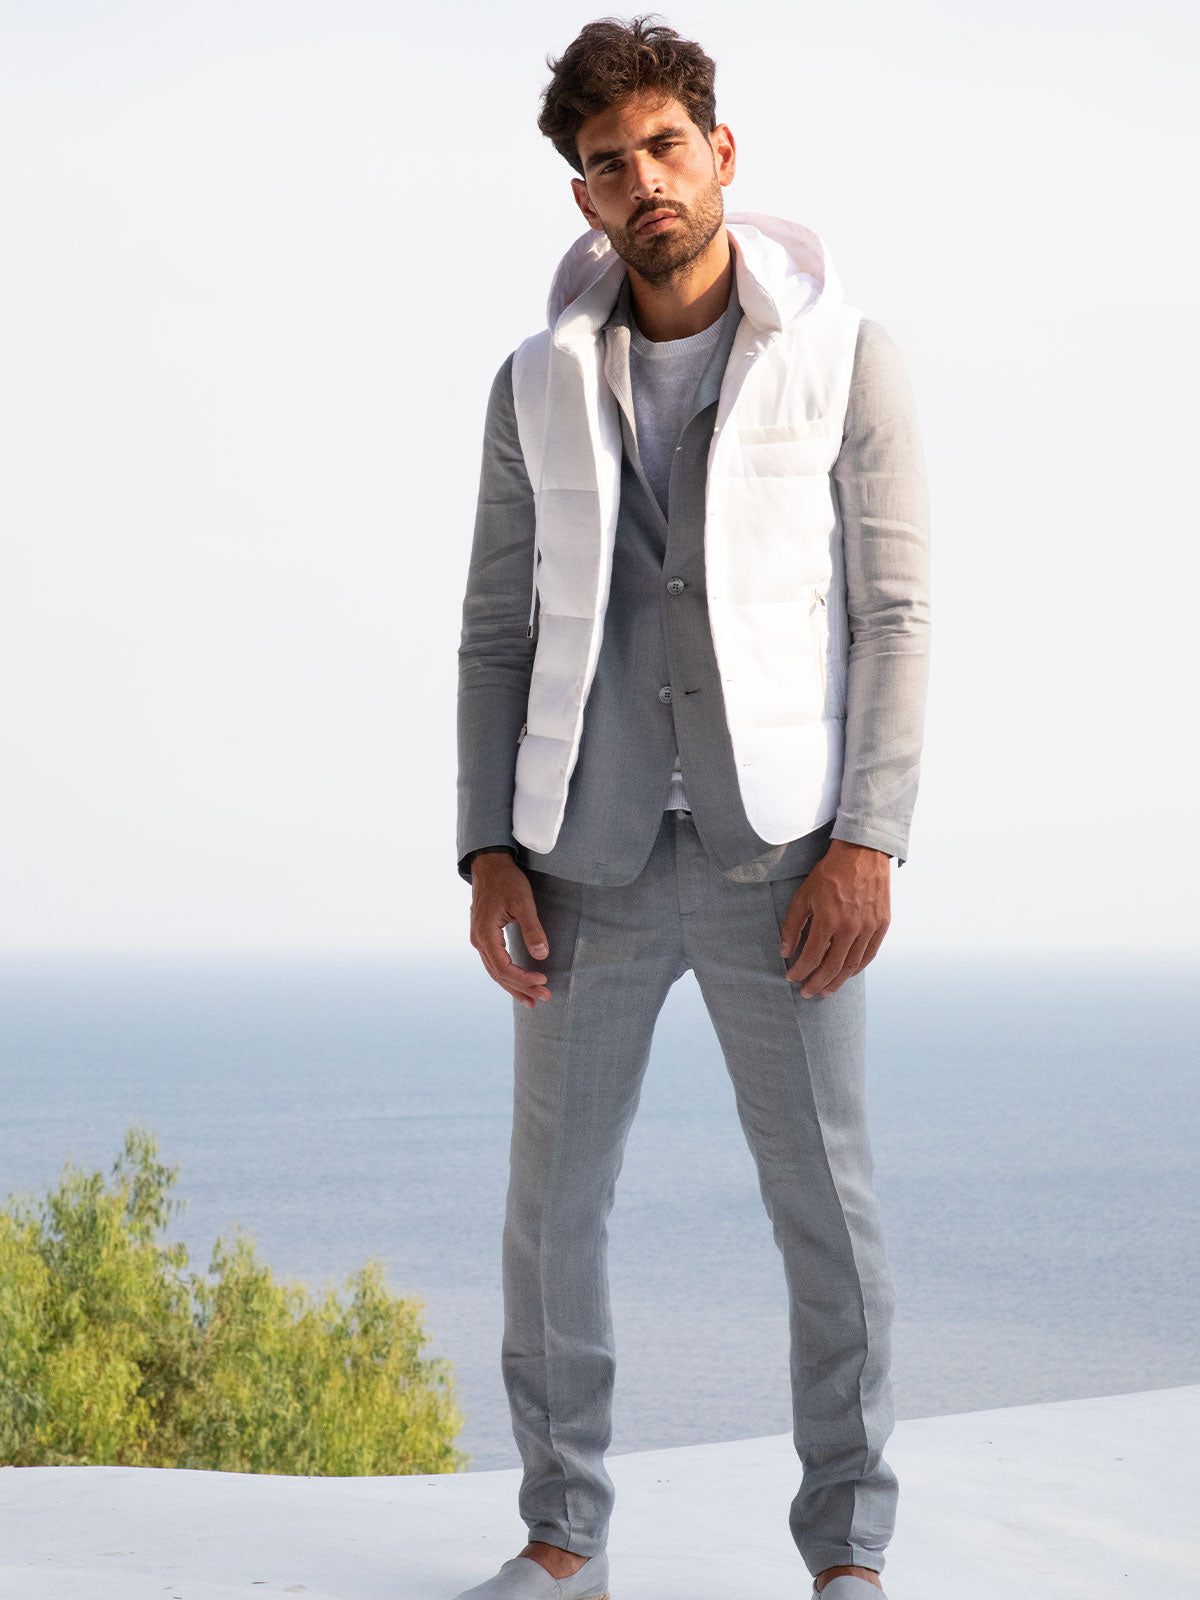 pantalone malta 100% capri dark grey linen worn by model